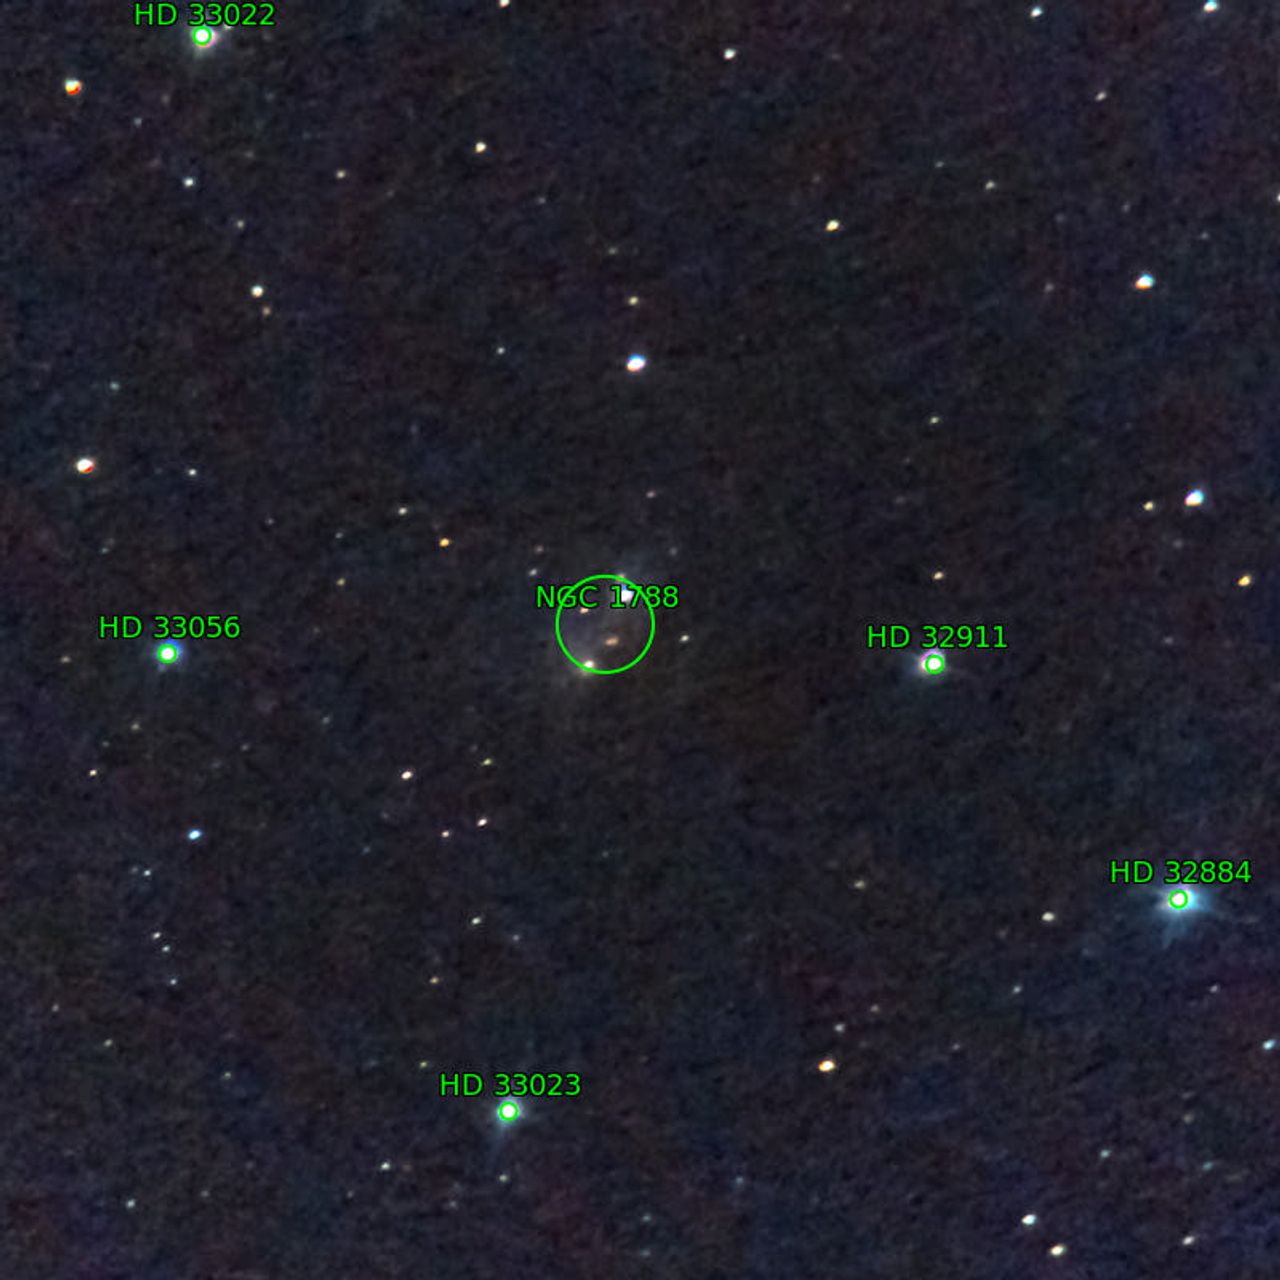 Annotation around NGC1788